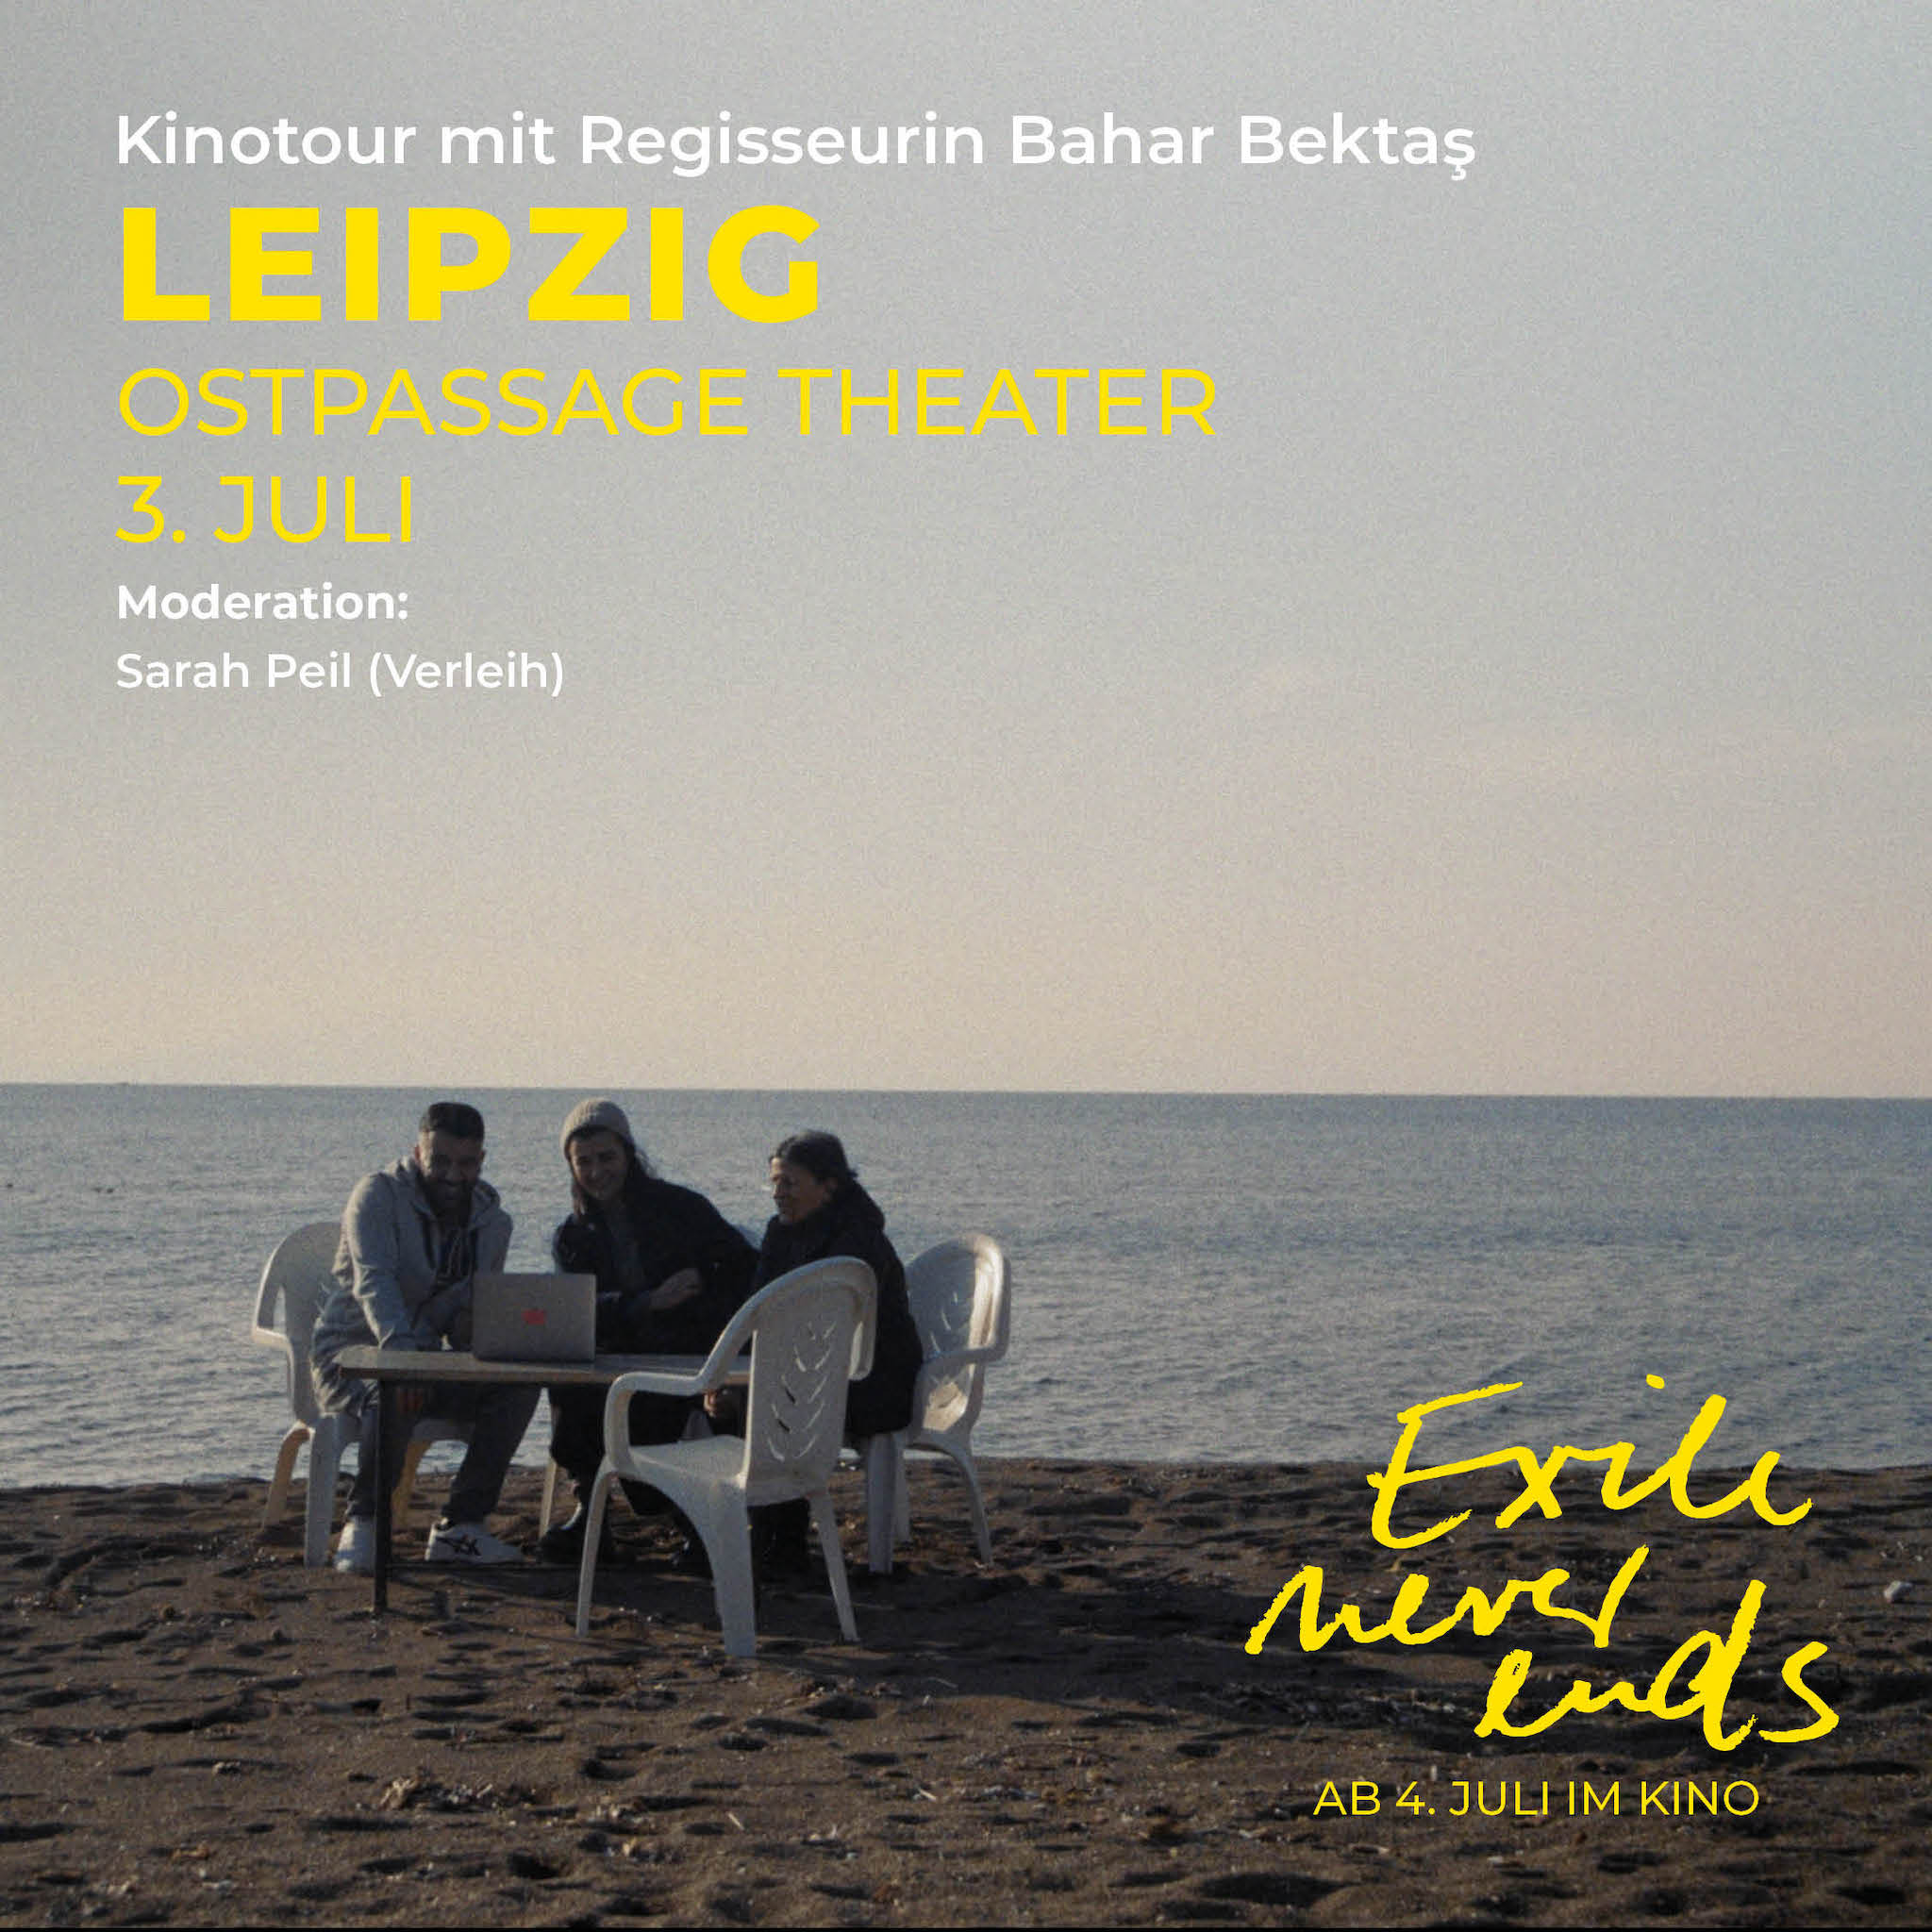 Kinotour "Exile Never Ends" - mit Regisseurin Bahar Bektaş